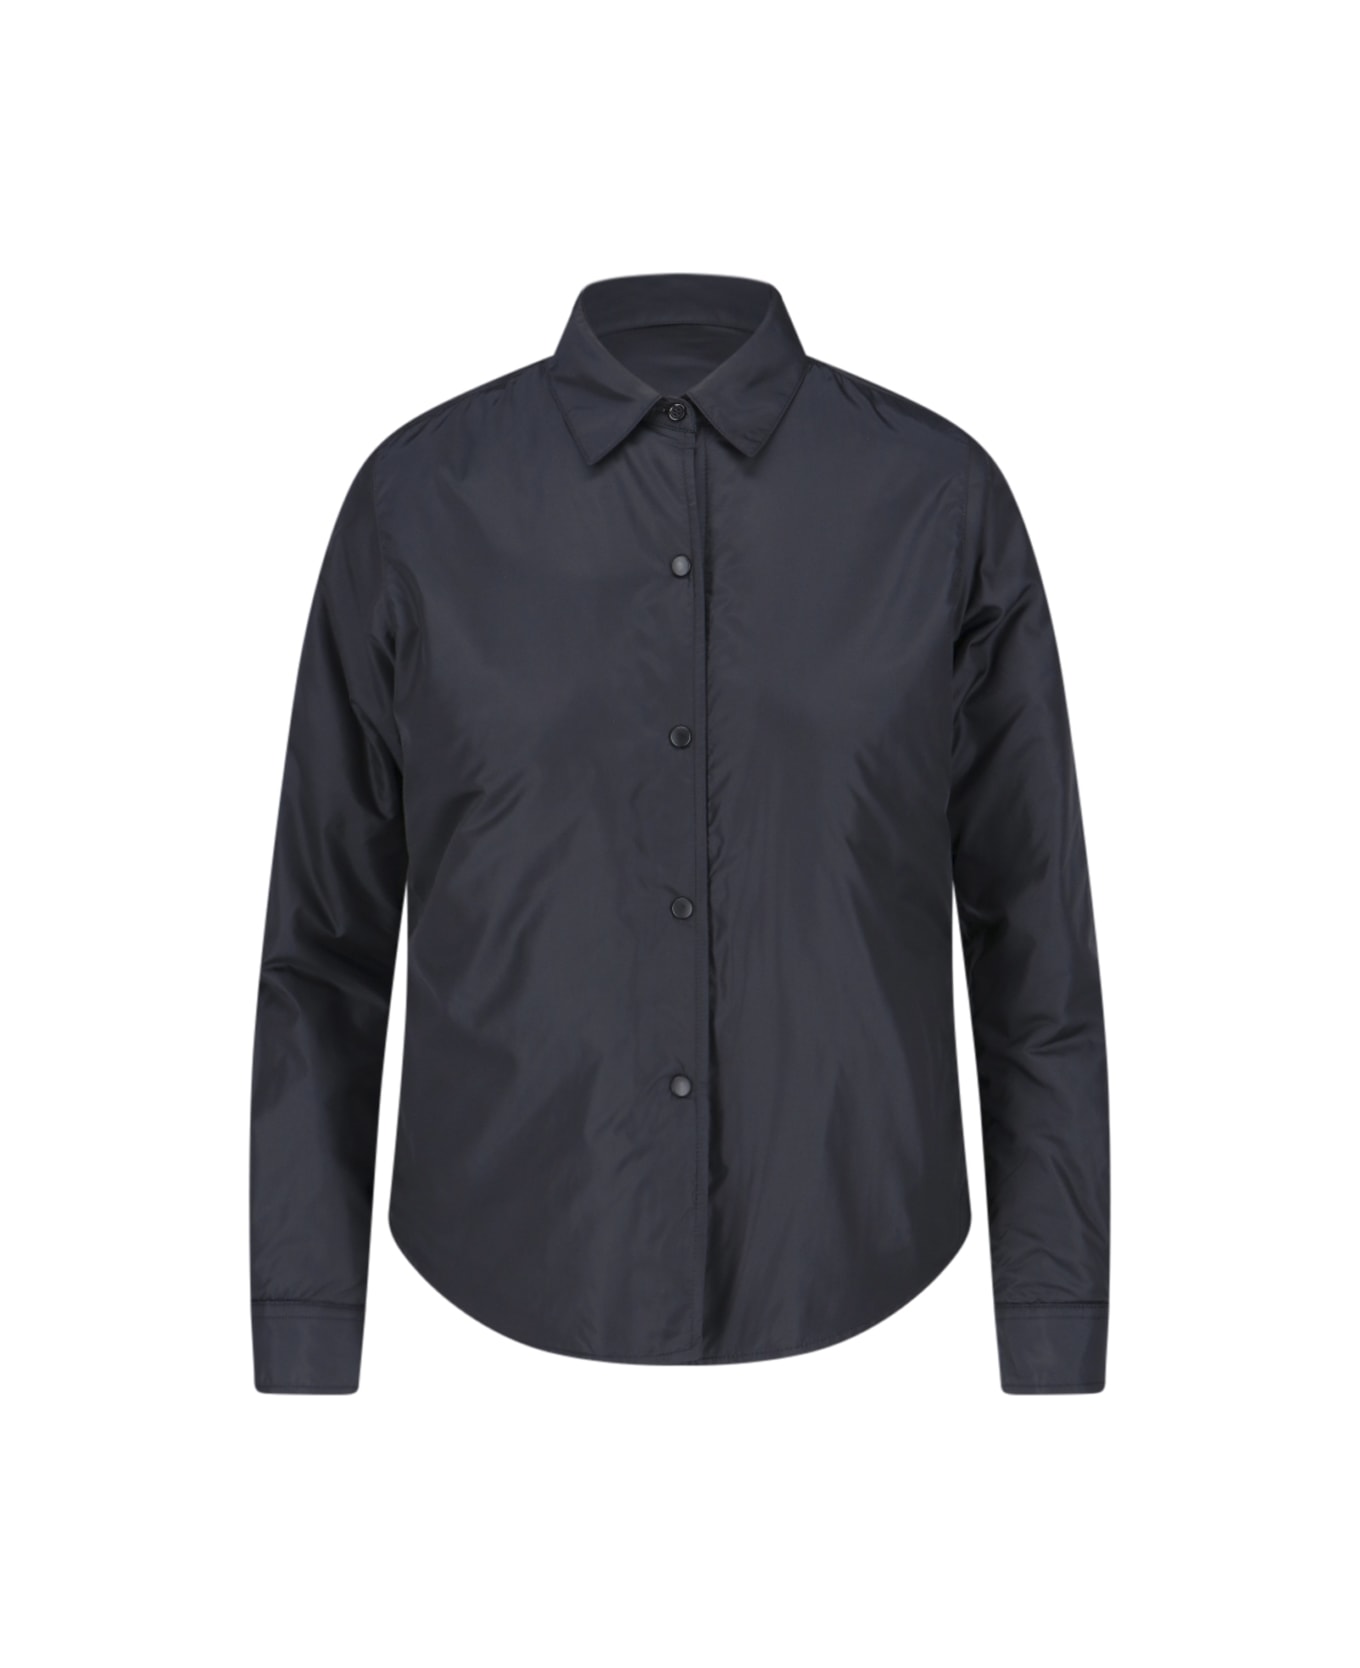 Aspesi Black Glue Shirt Jacket - Black シャツ